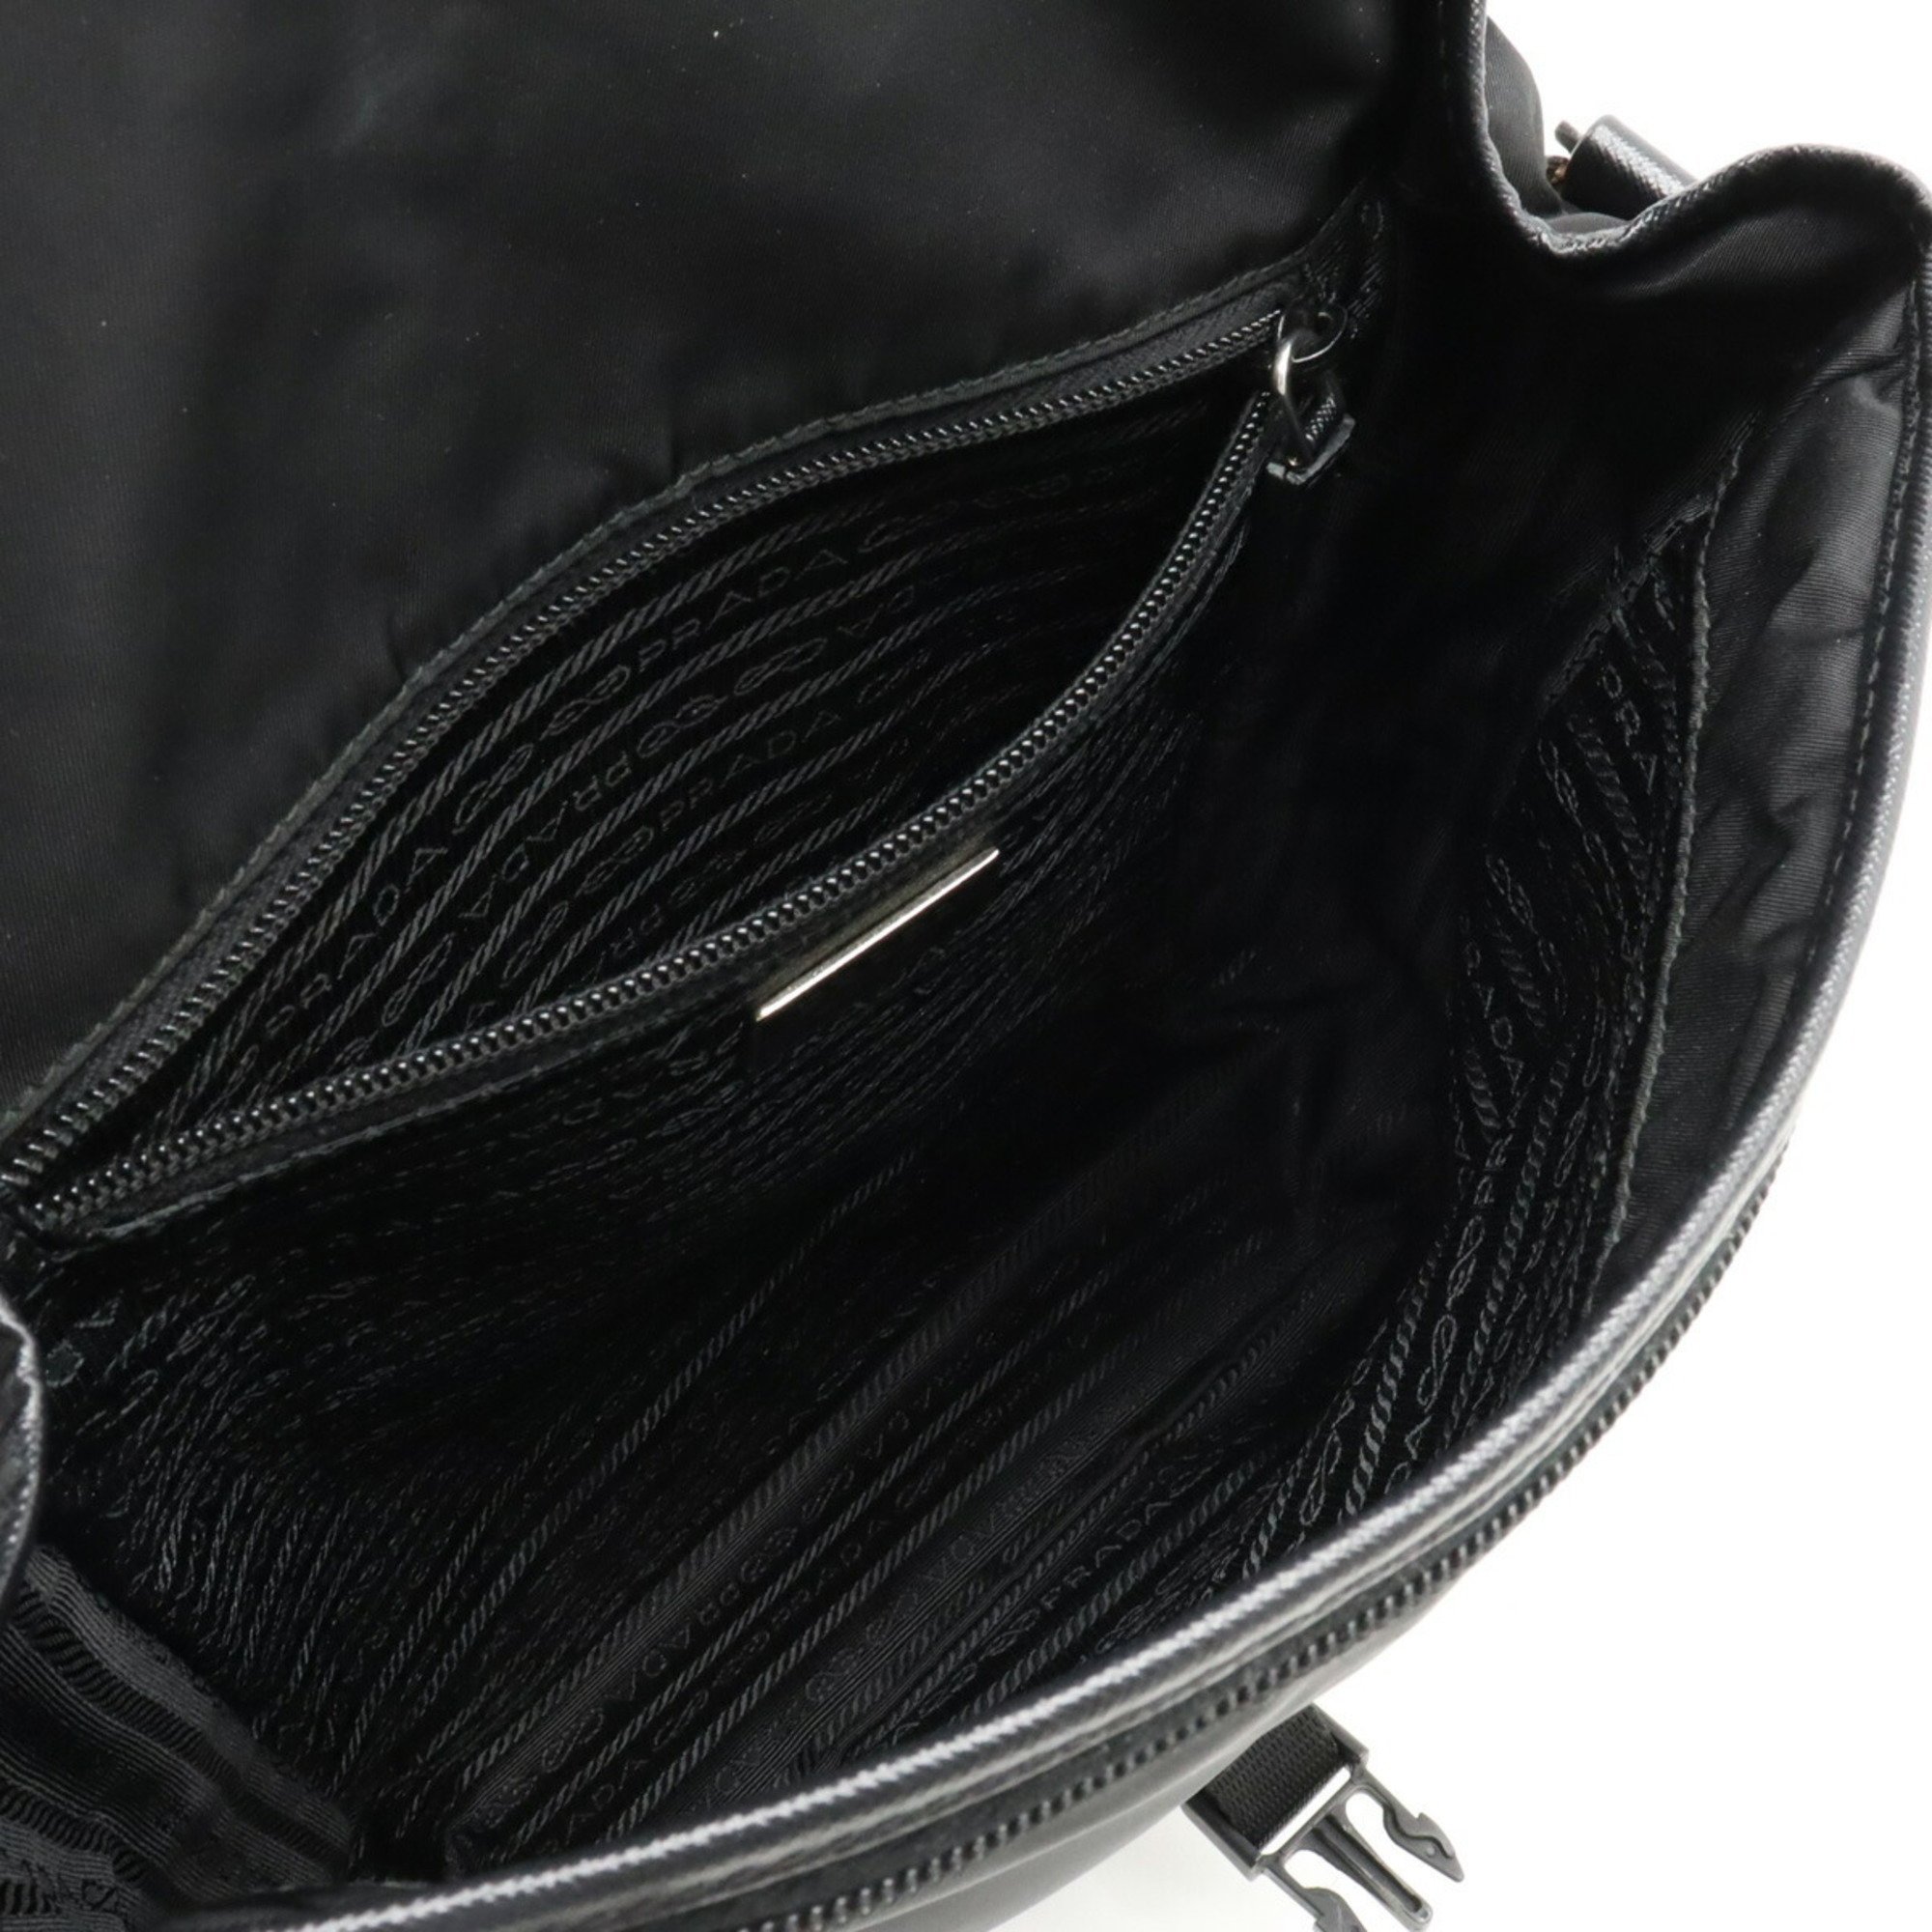 PRADA Prada Shoulder Bag Nylon Leather NERO Black VA0339